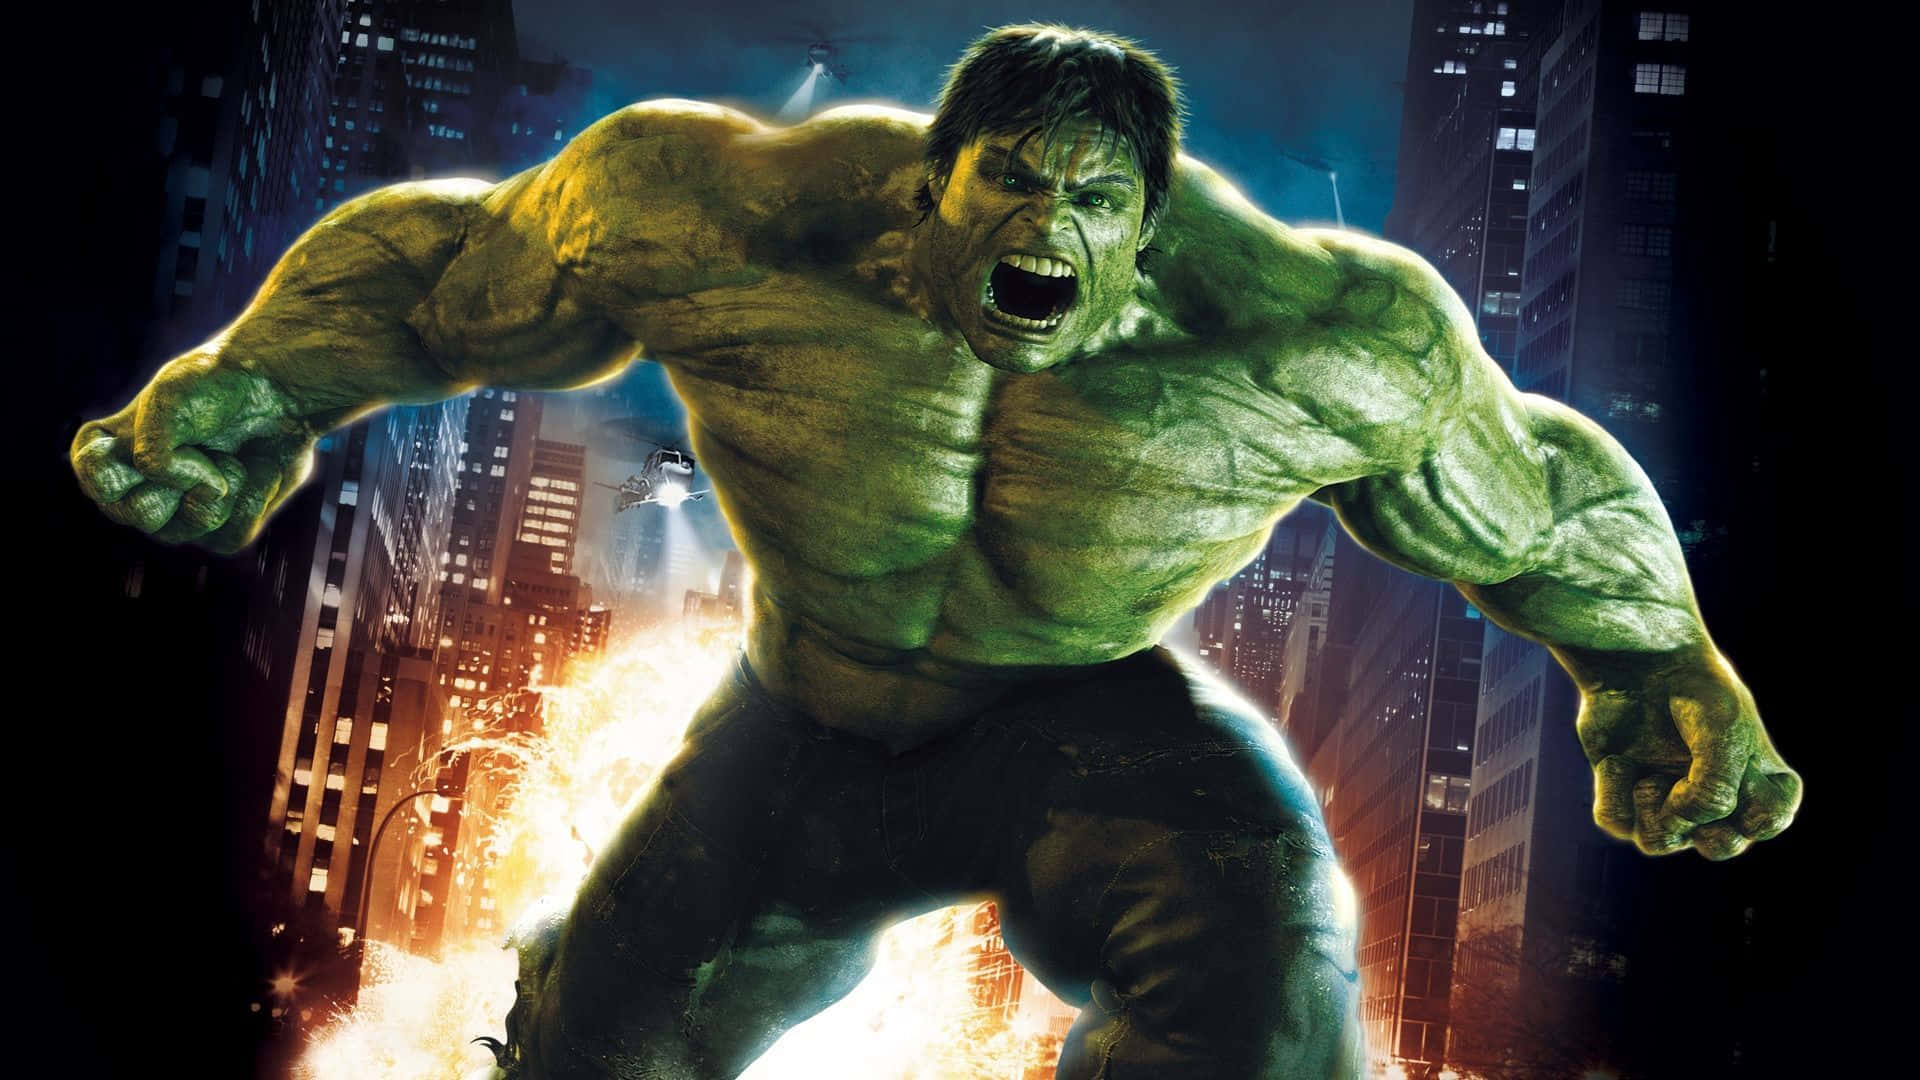 The Incredible Hulk smashing through a wall